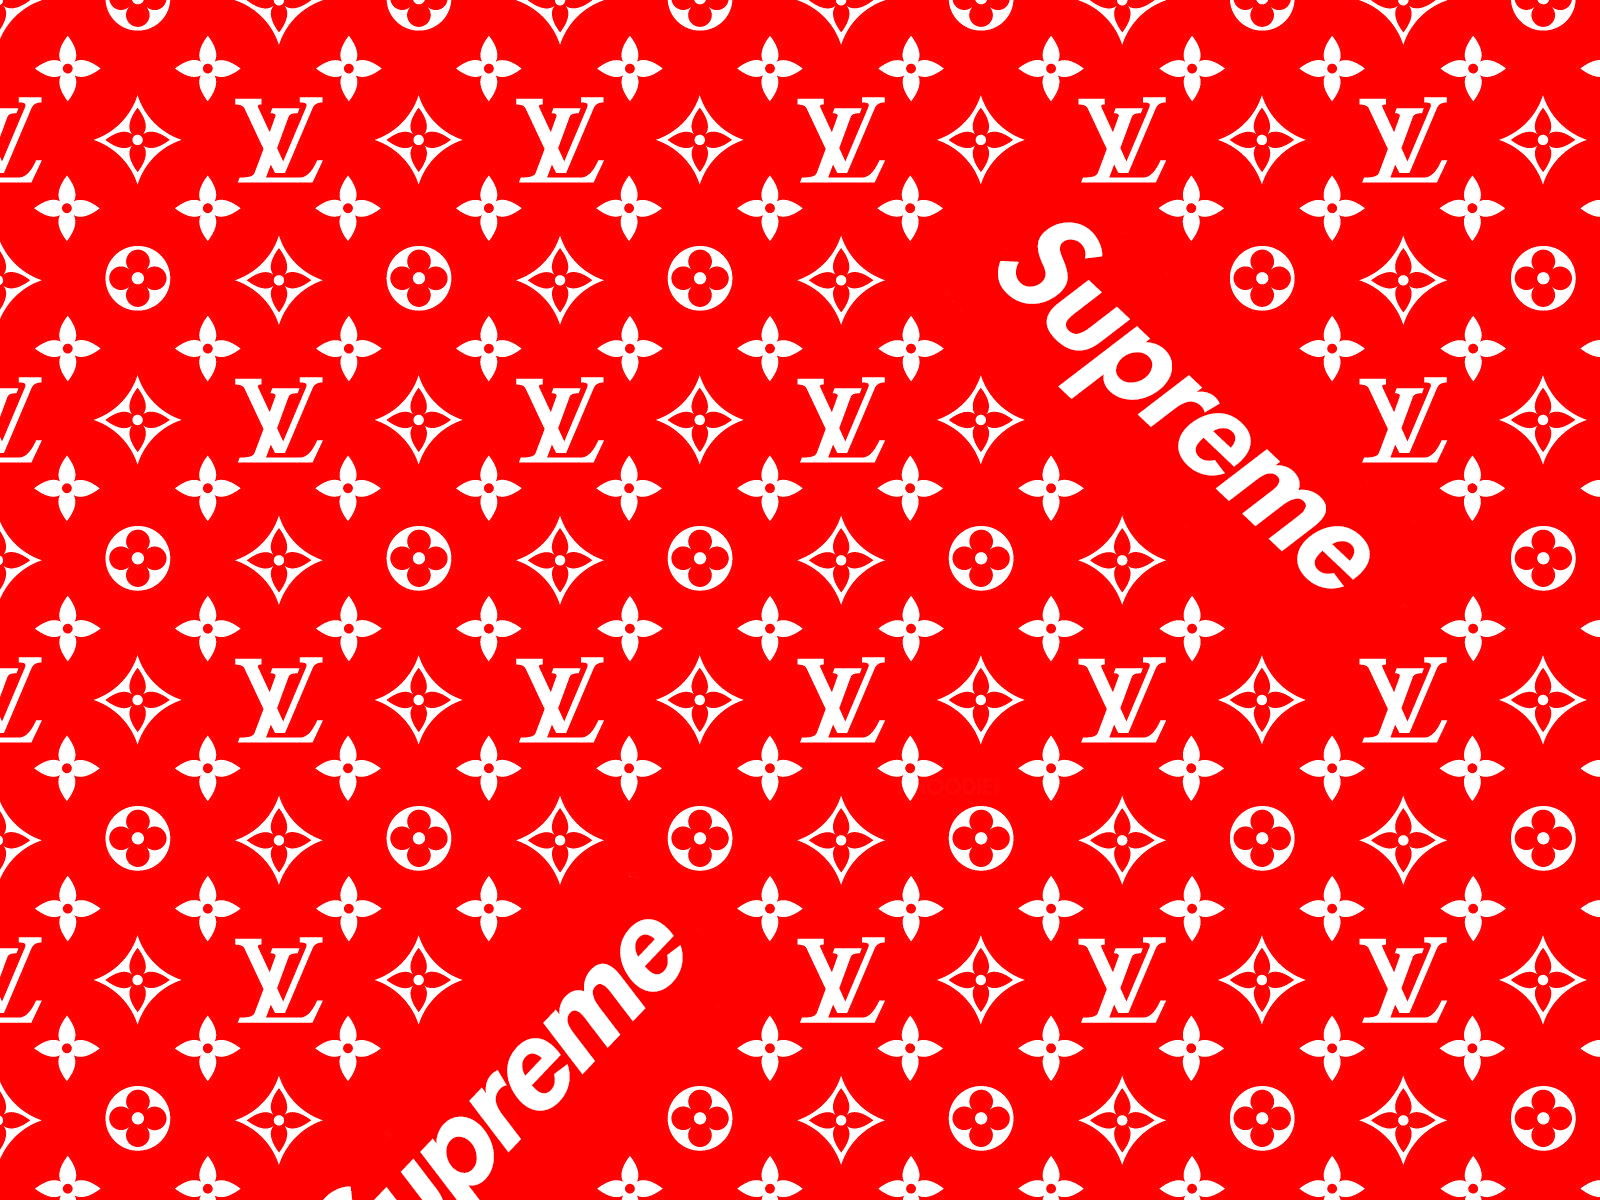 Supreme and louis v, louis vuitton, lv, HD phone wallpaper